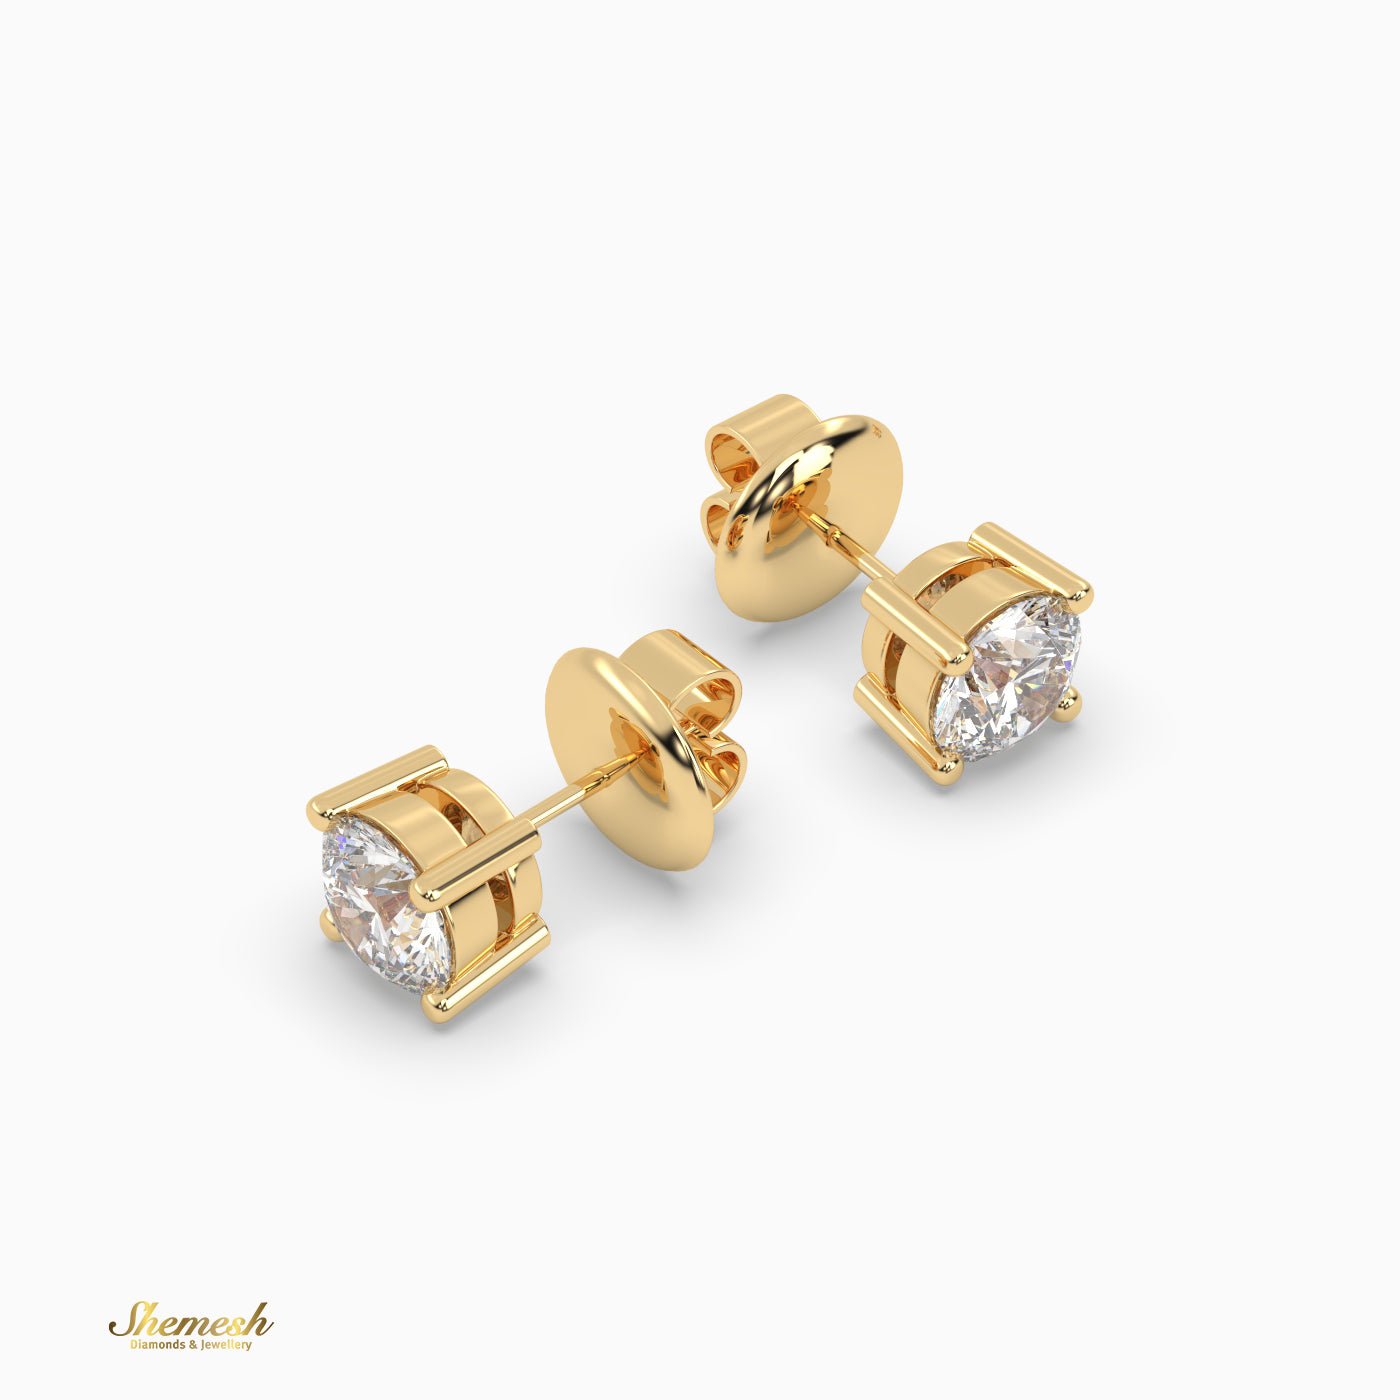 Solitaire 4 prongs Stud Earrings - shemesh_diamonds